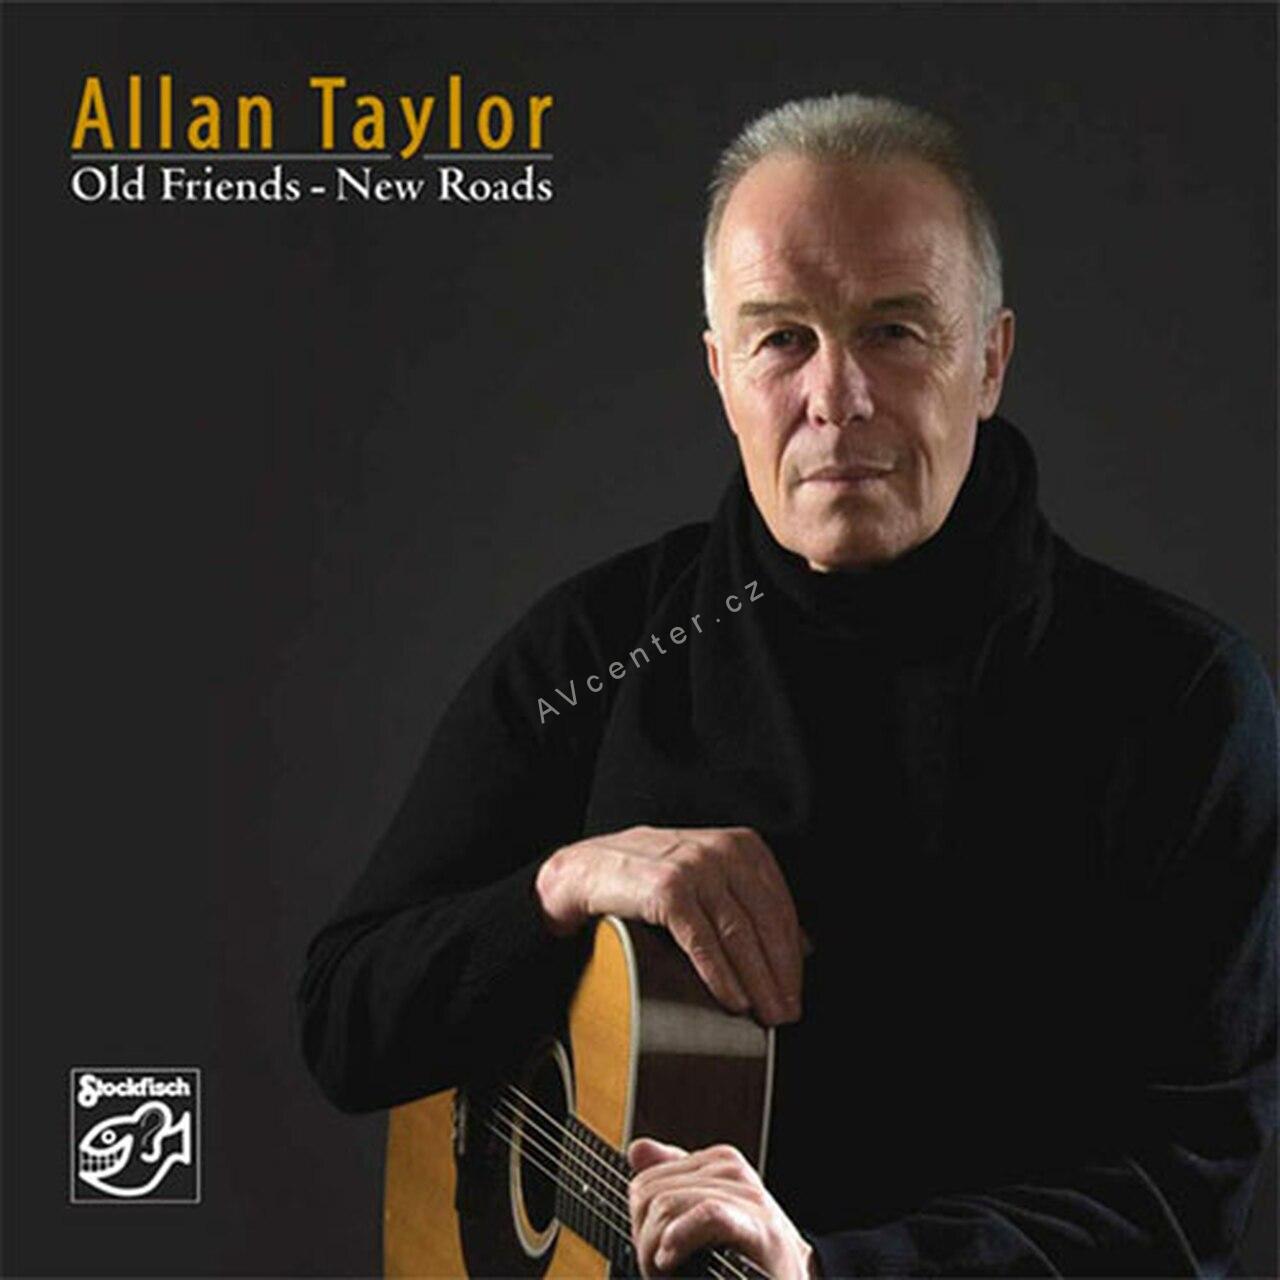 Allan Taylor